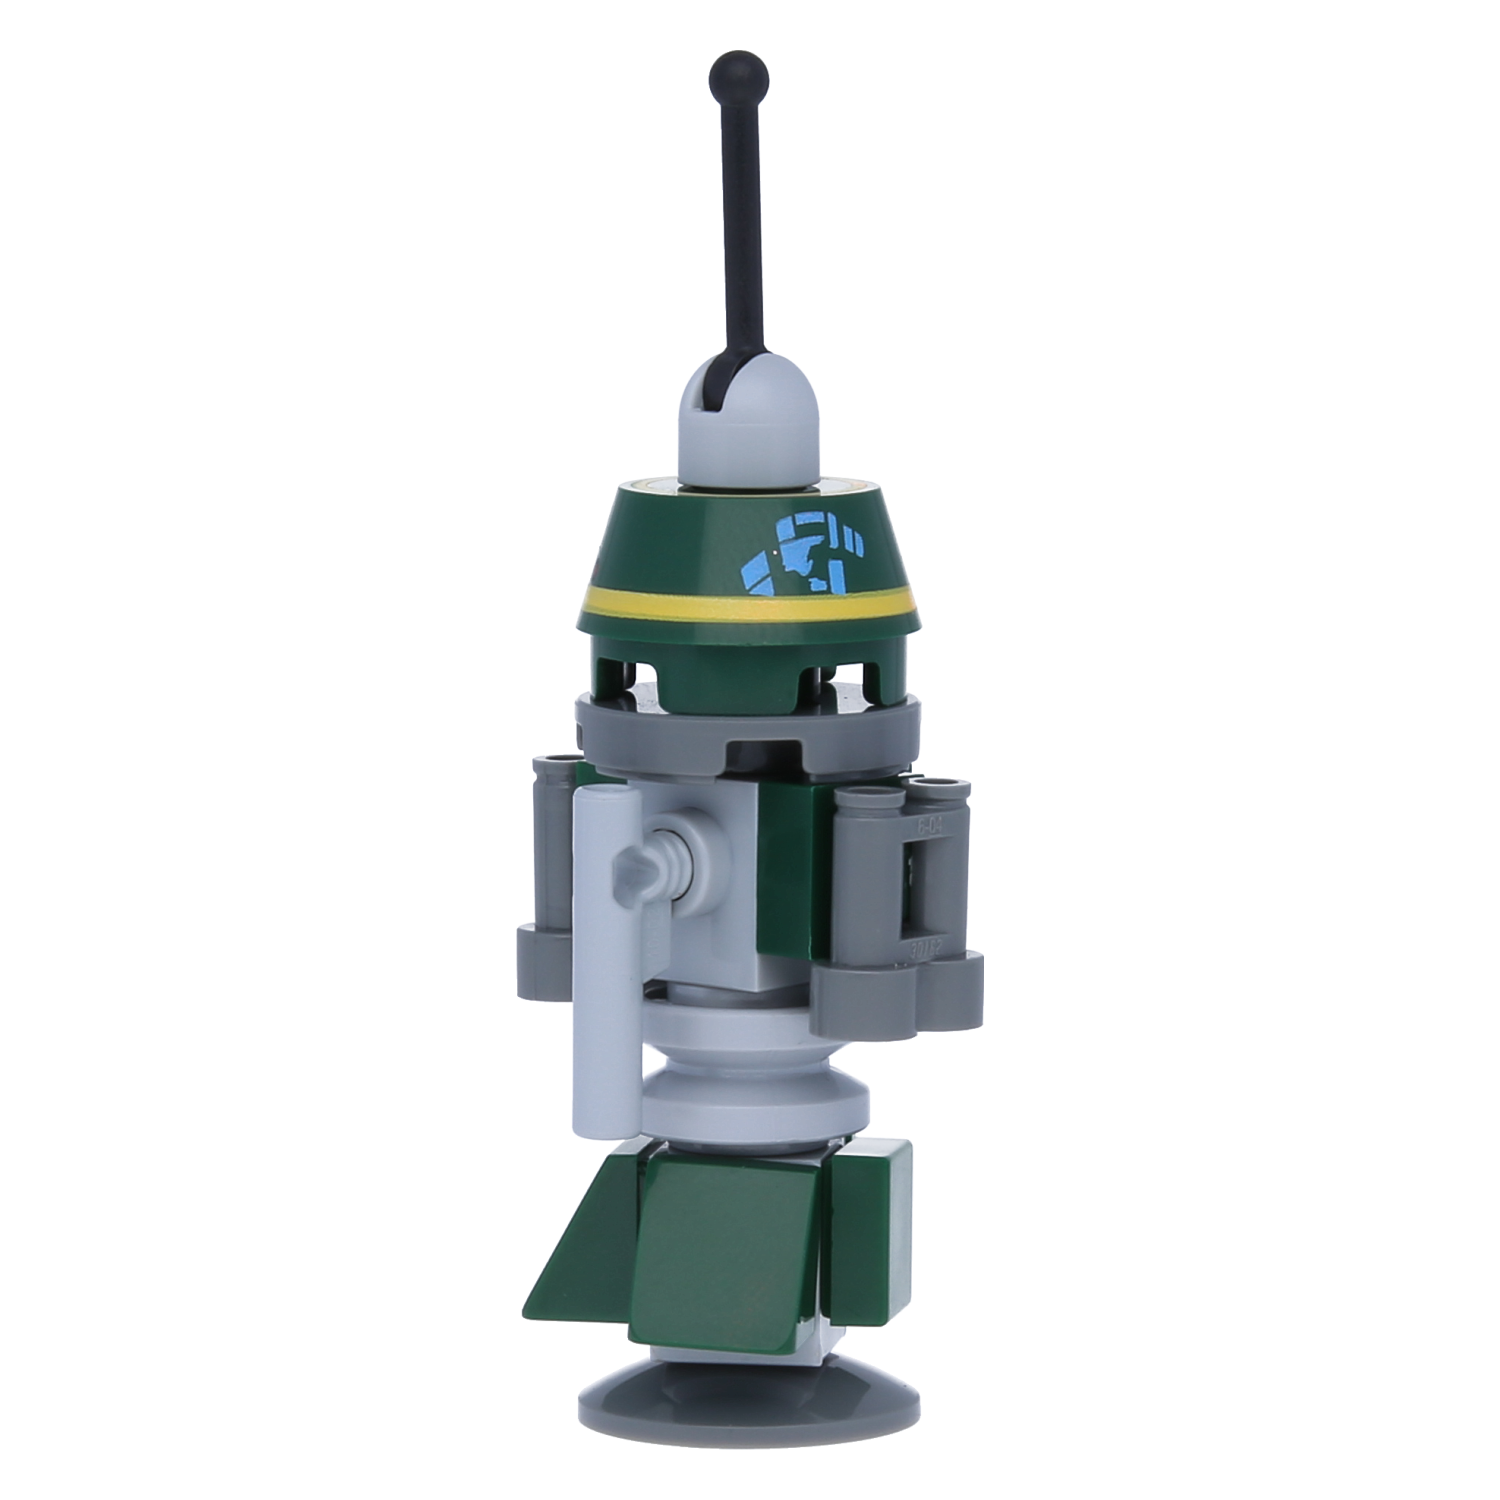 LEGO Star Wars Minifigure - R1 Droid